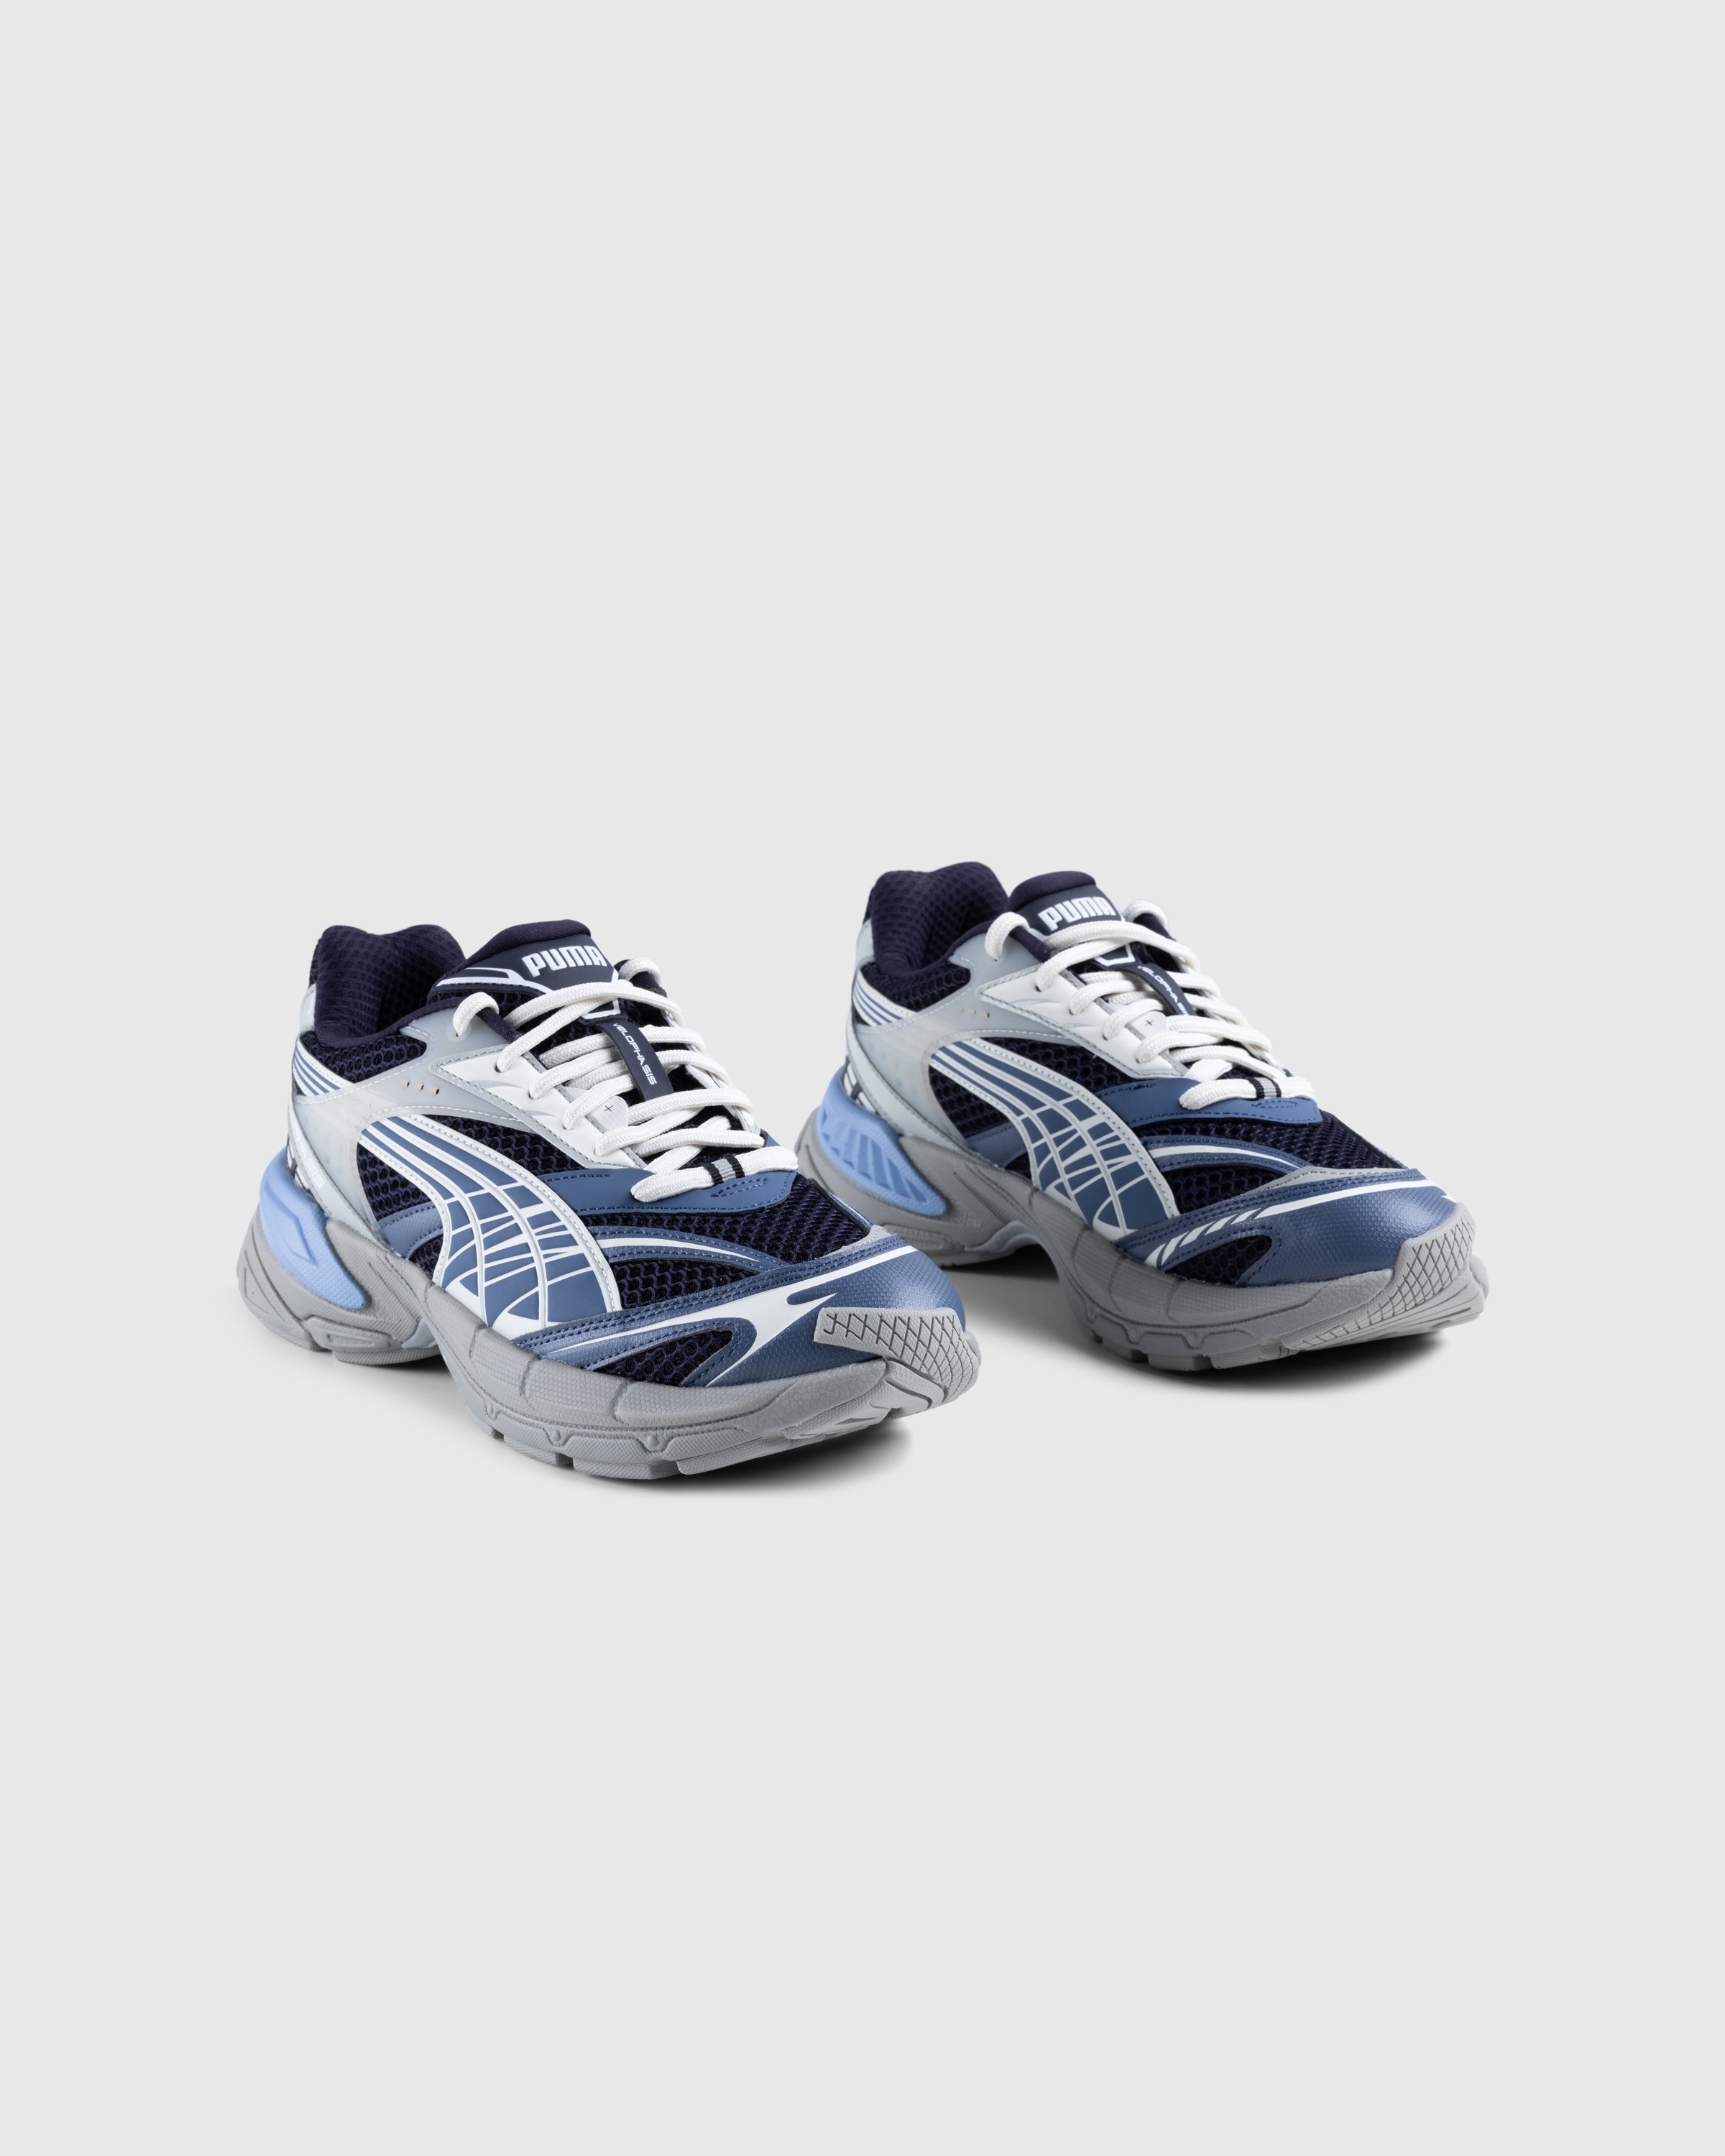 Puma - Velophasis Phased White/Blue - Footwear - Multi - Image 3